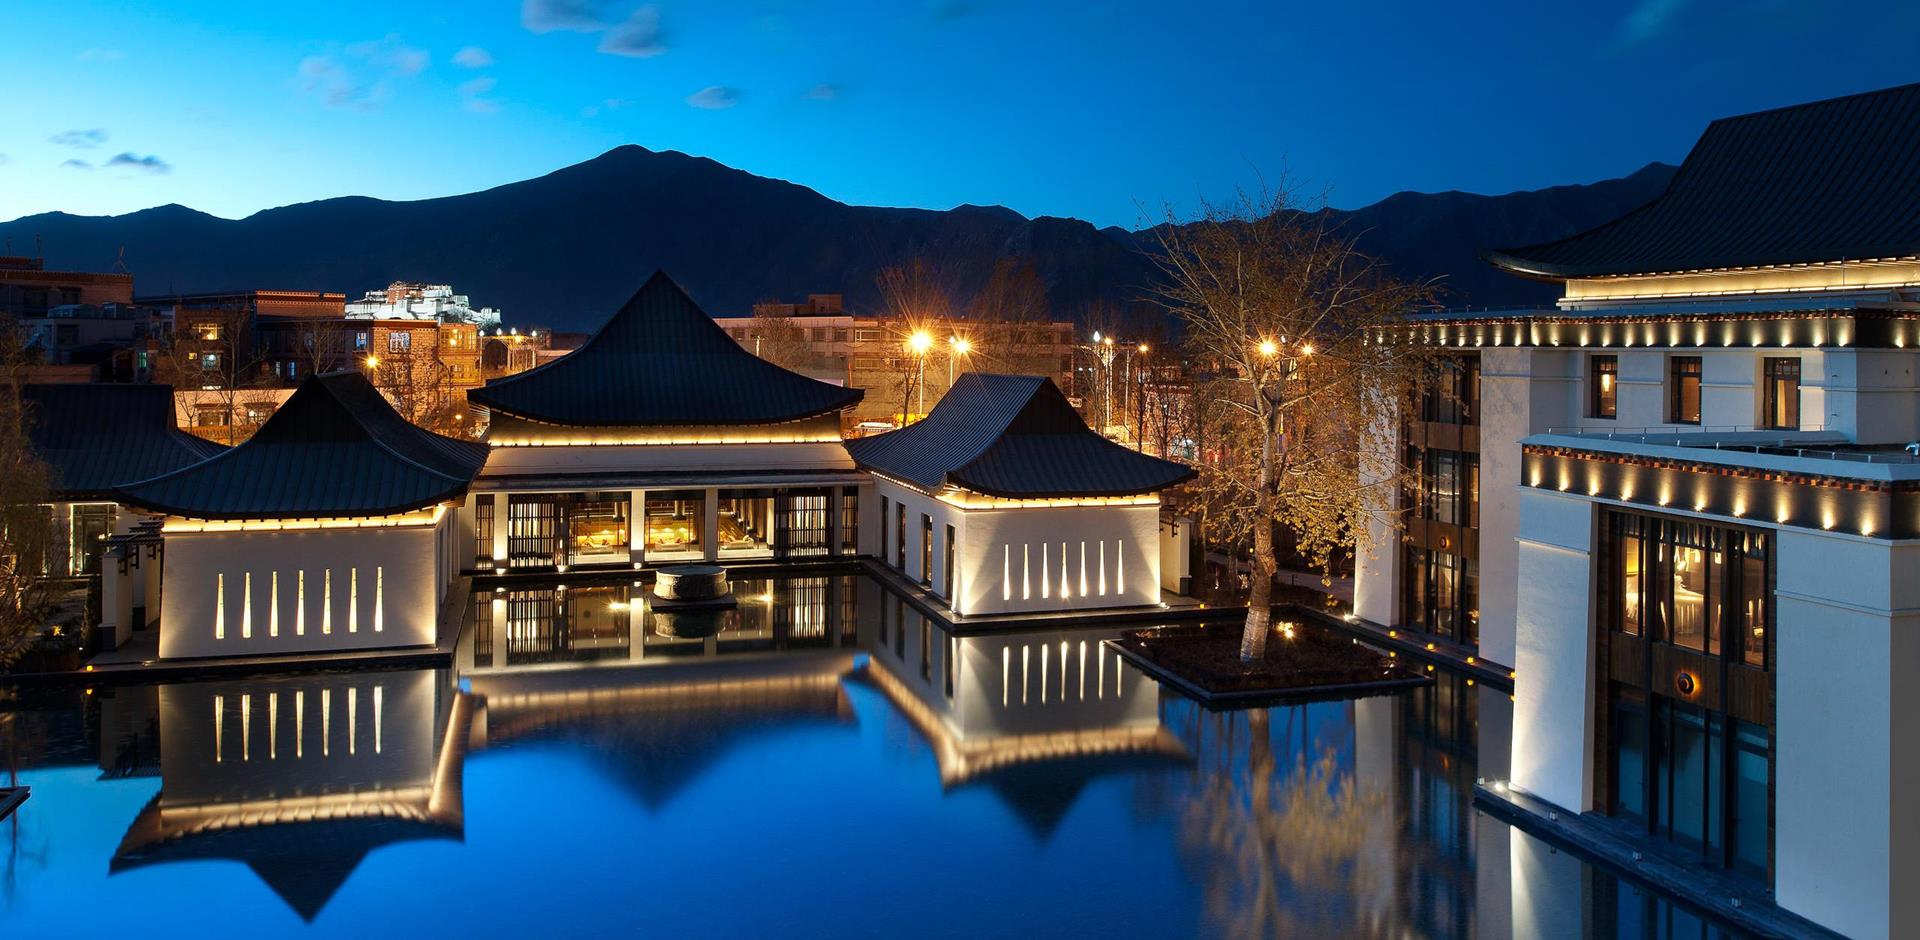 Pool and exterior, St Regis Lhasa, China